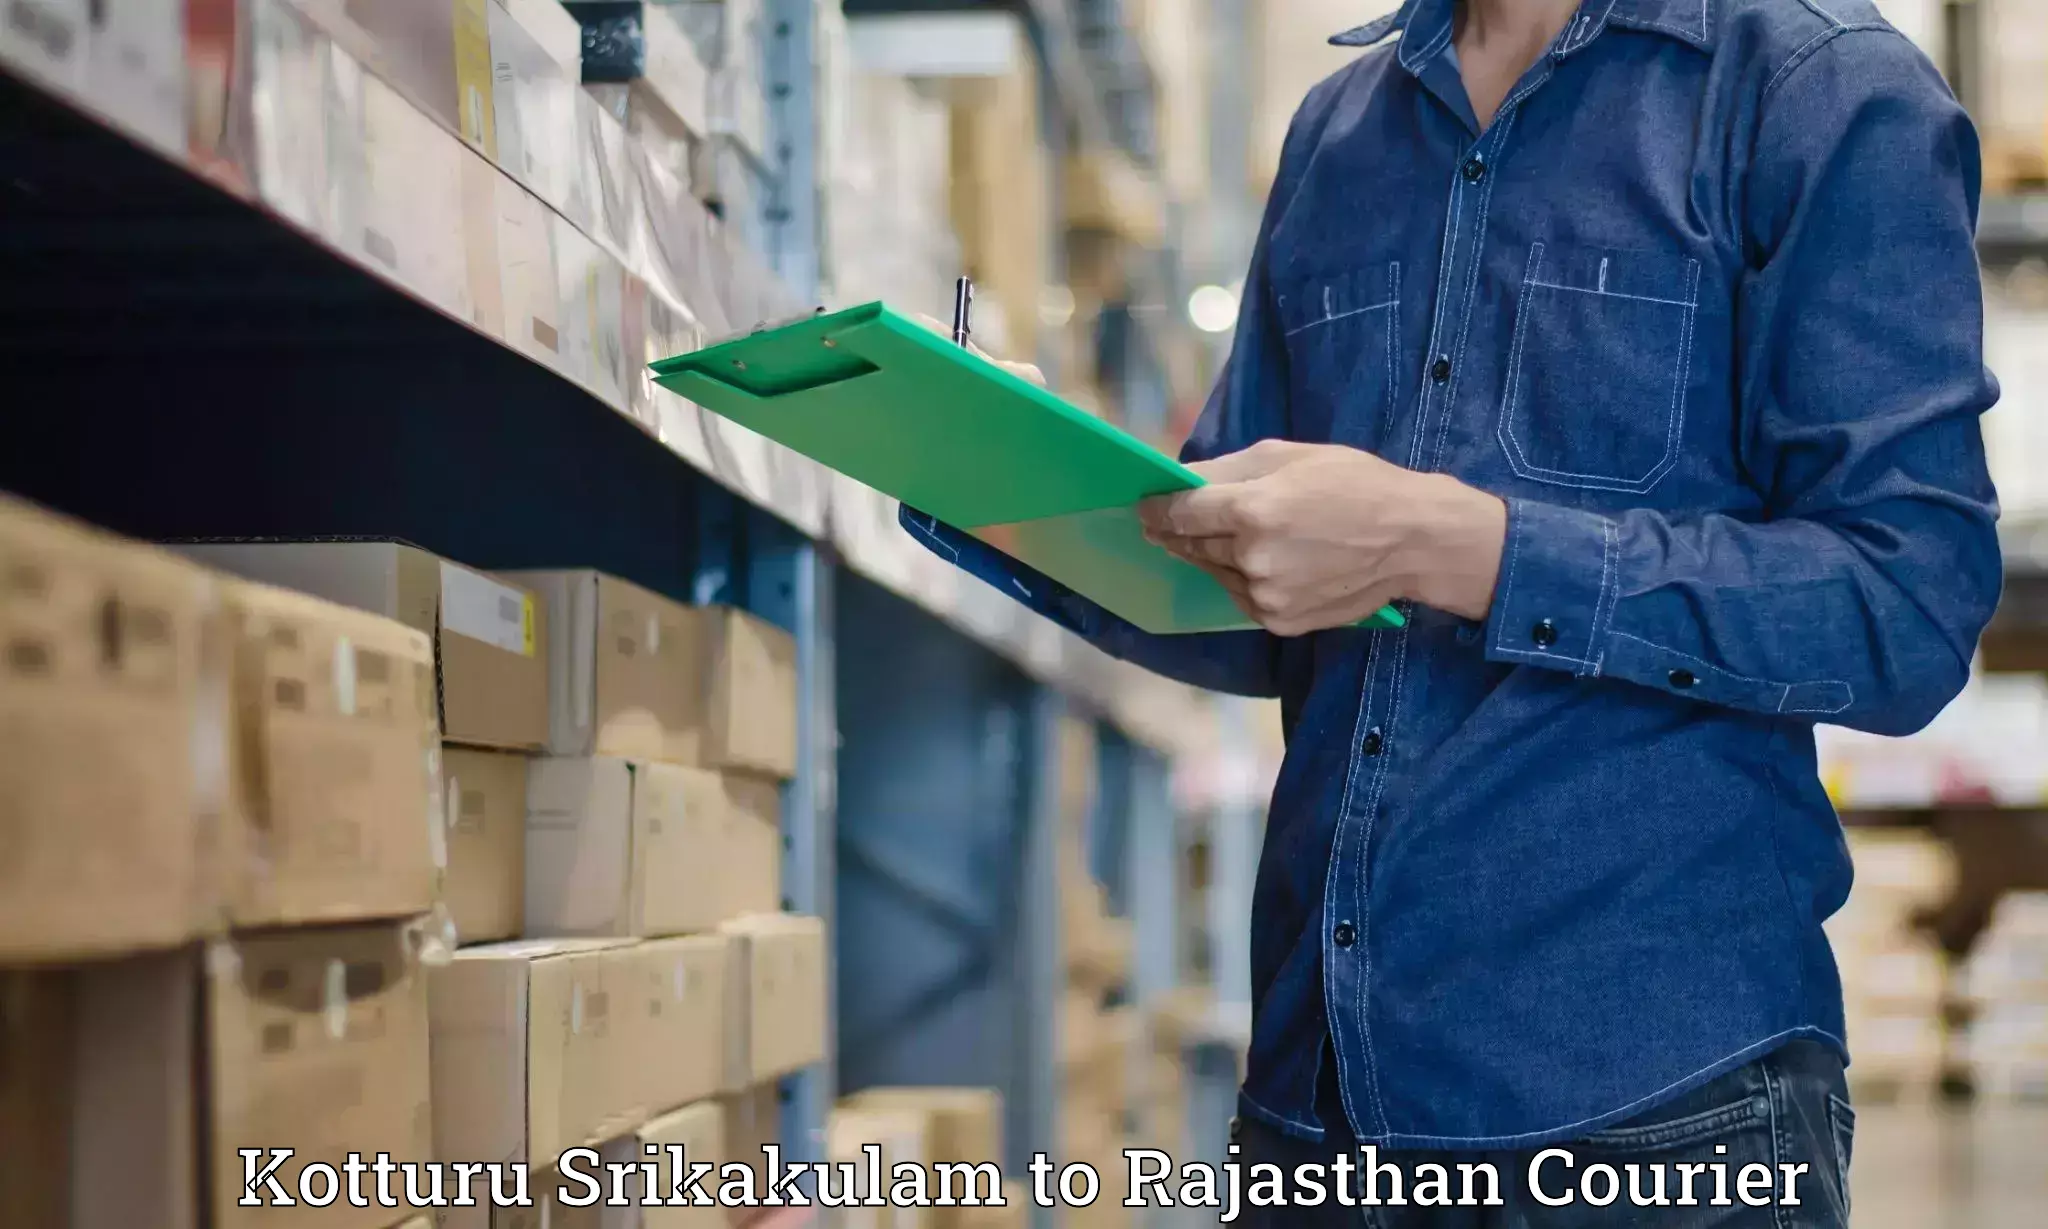 Courier service partnerships Kotturu Srikakulam to Yeswanthapur